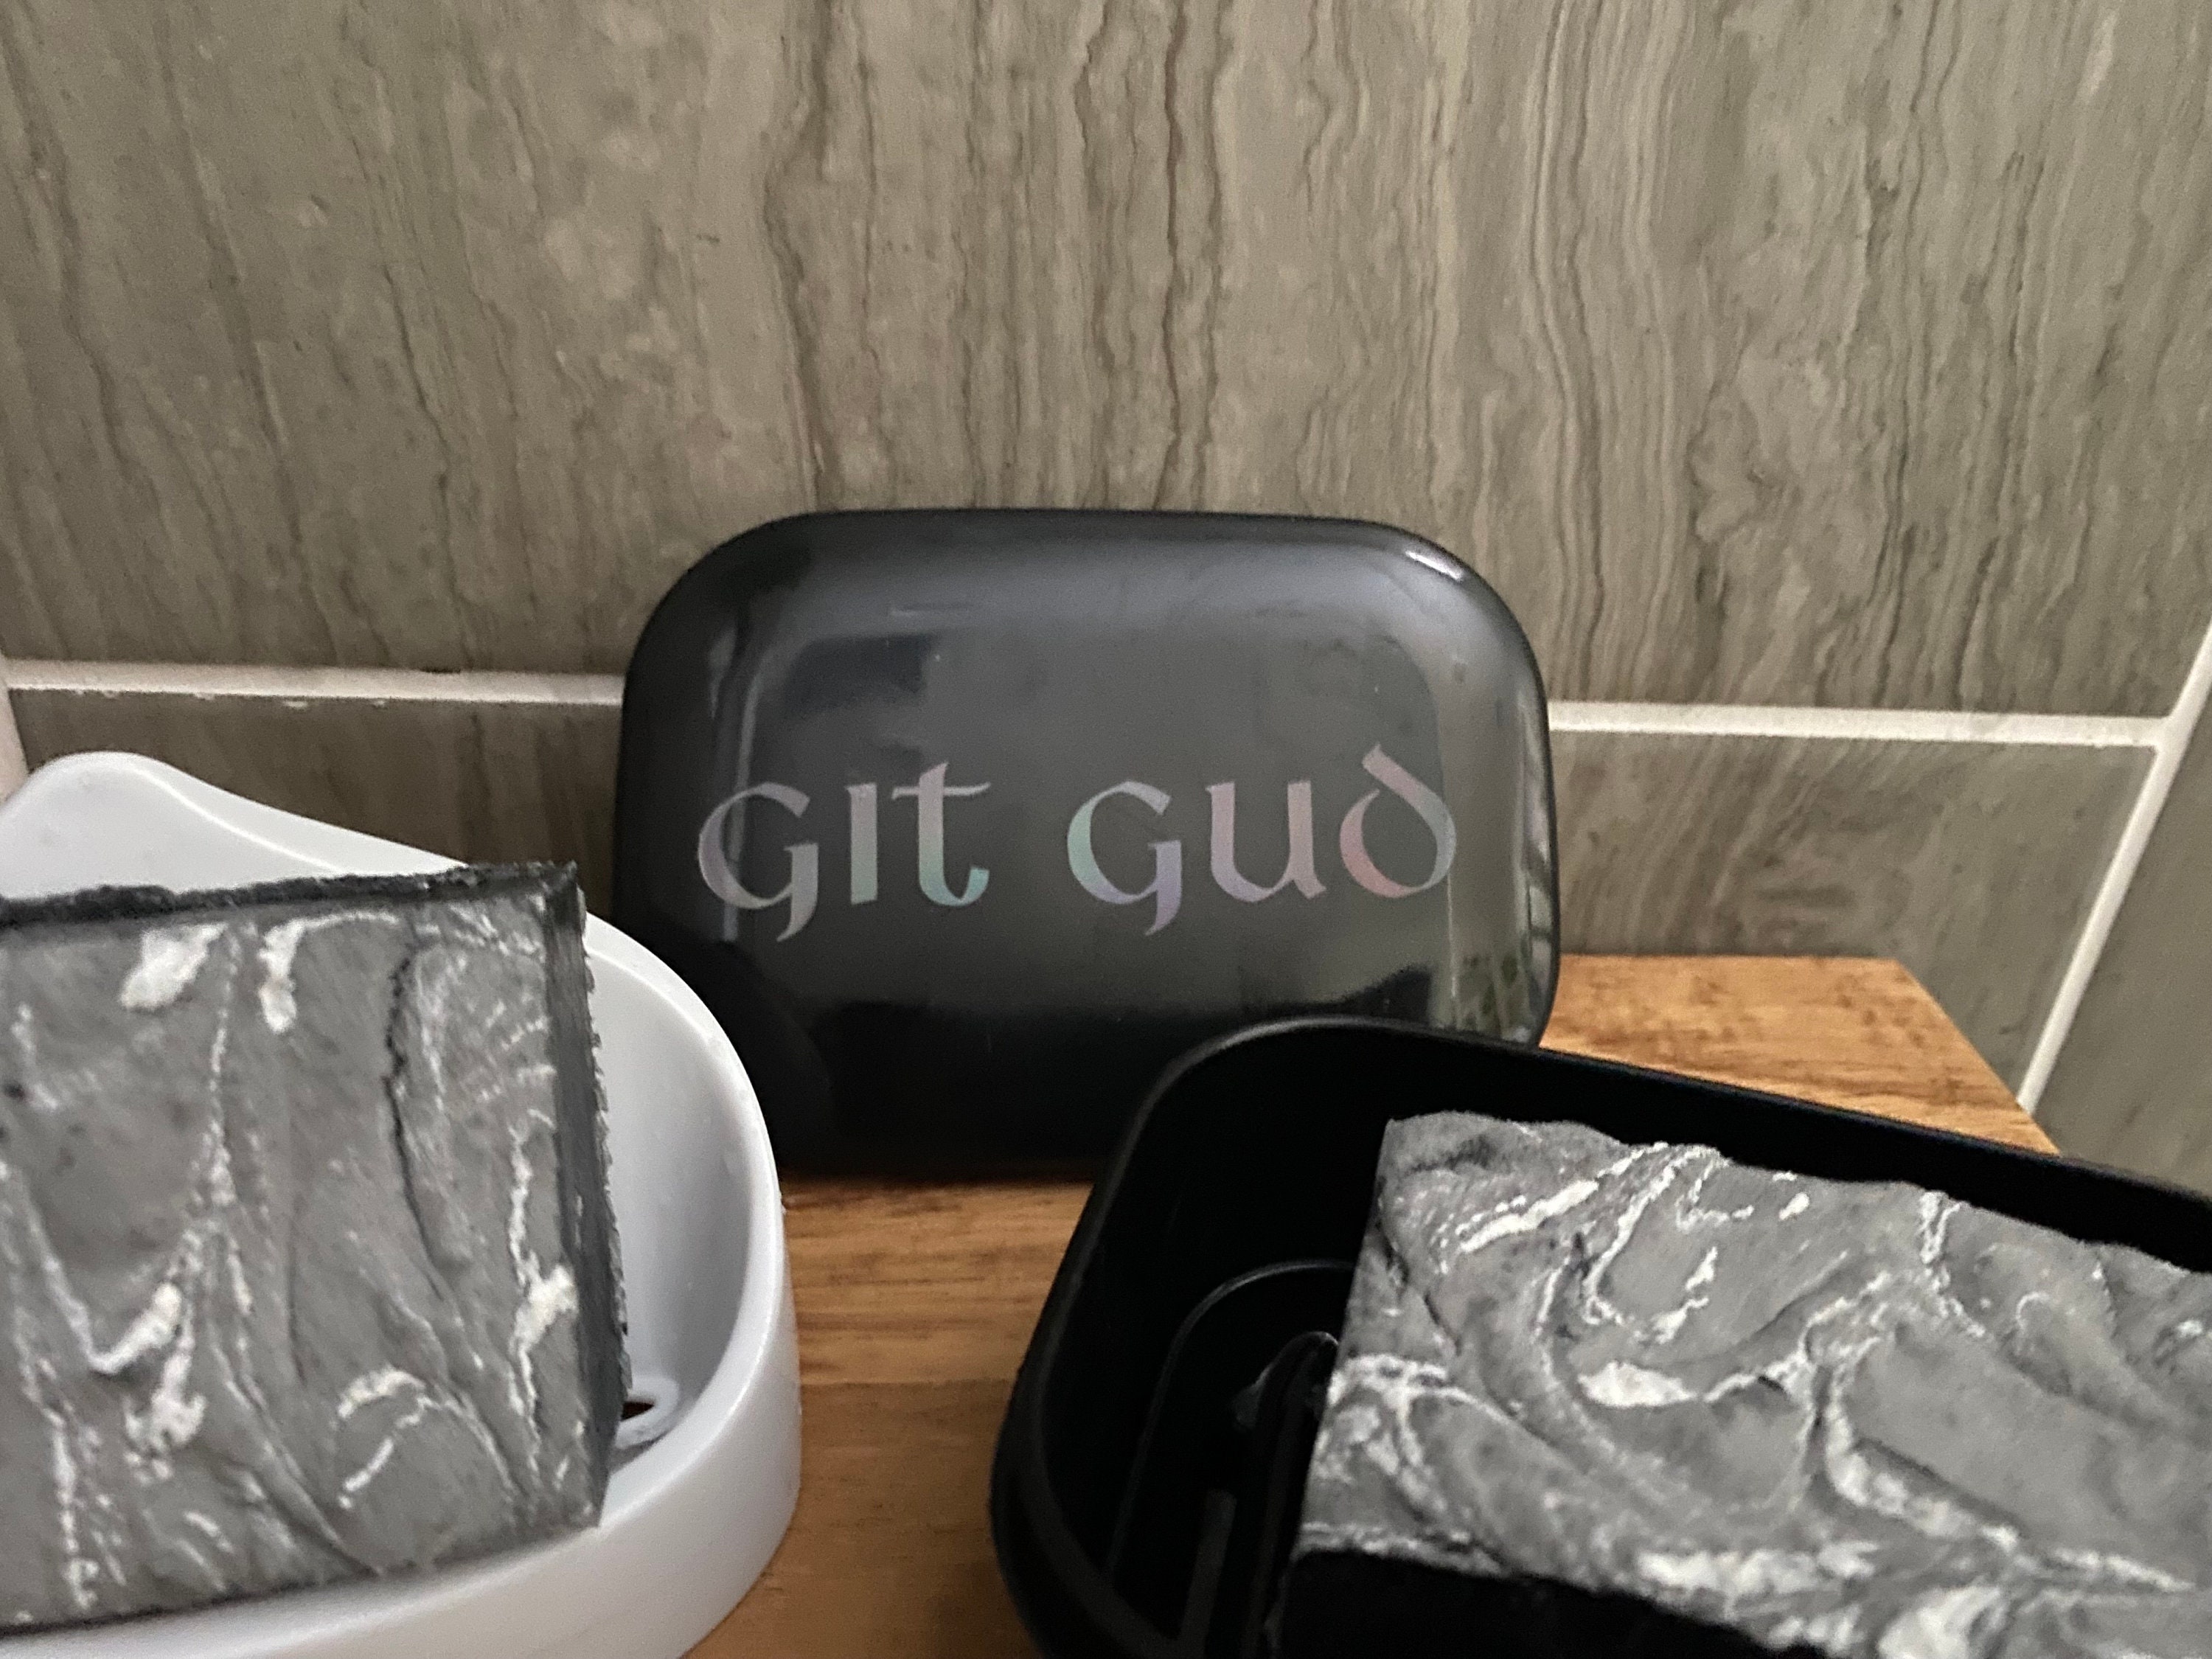 Git Gud - What does git gud mean?